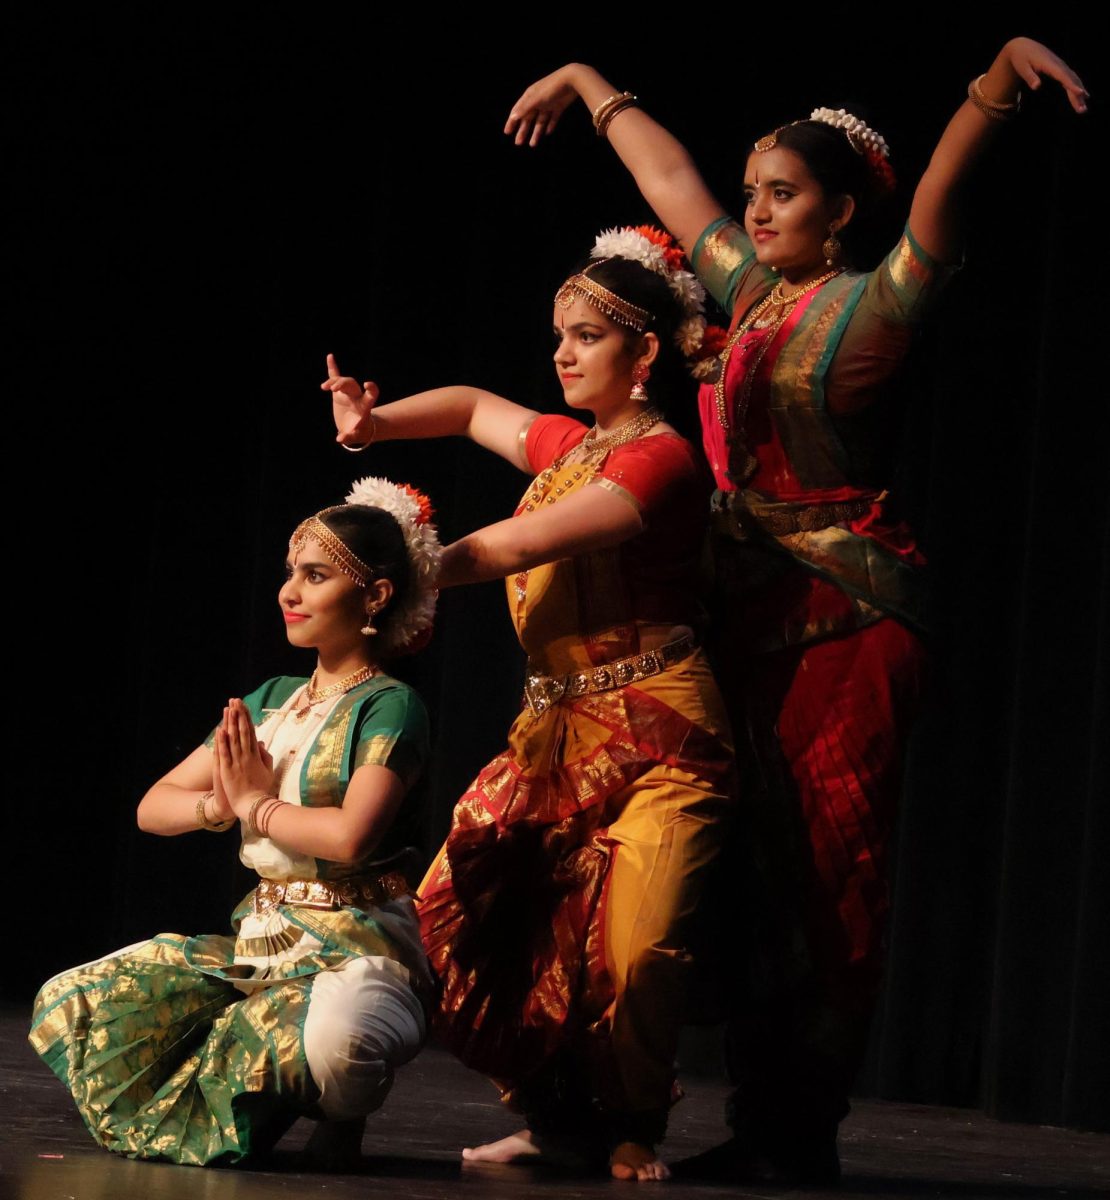 The Bharatanatyam Performance including Deepa Kandukuri, Aarya Ghimire, and Surabhi Mohan performing at the International Festival. 